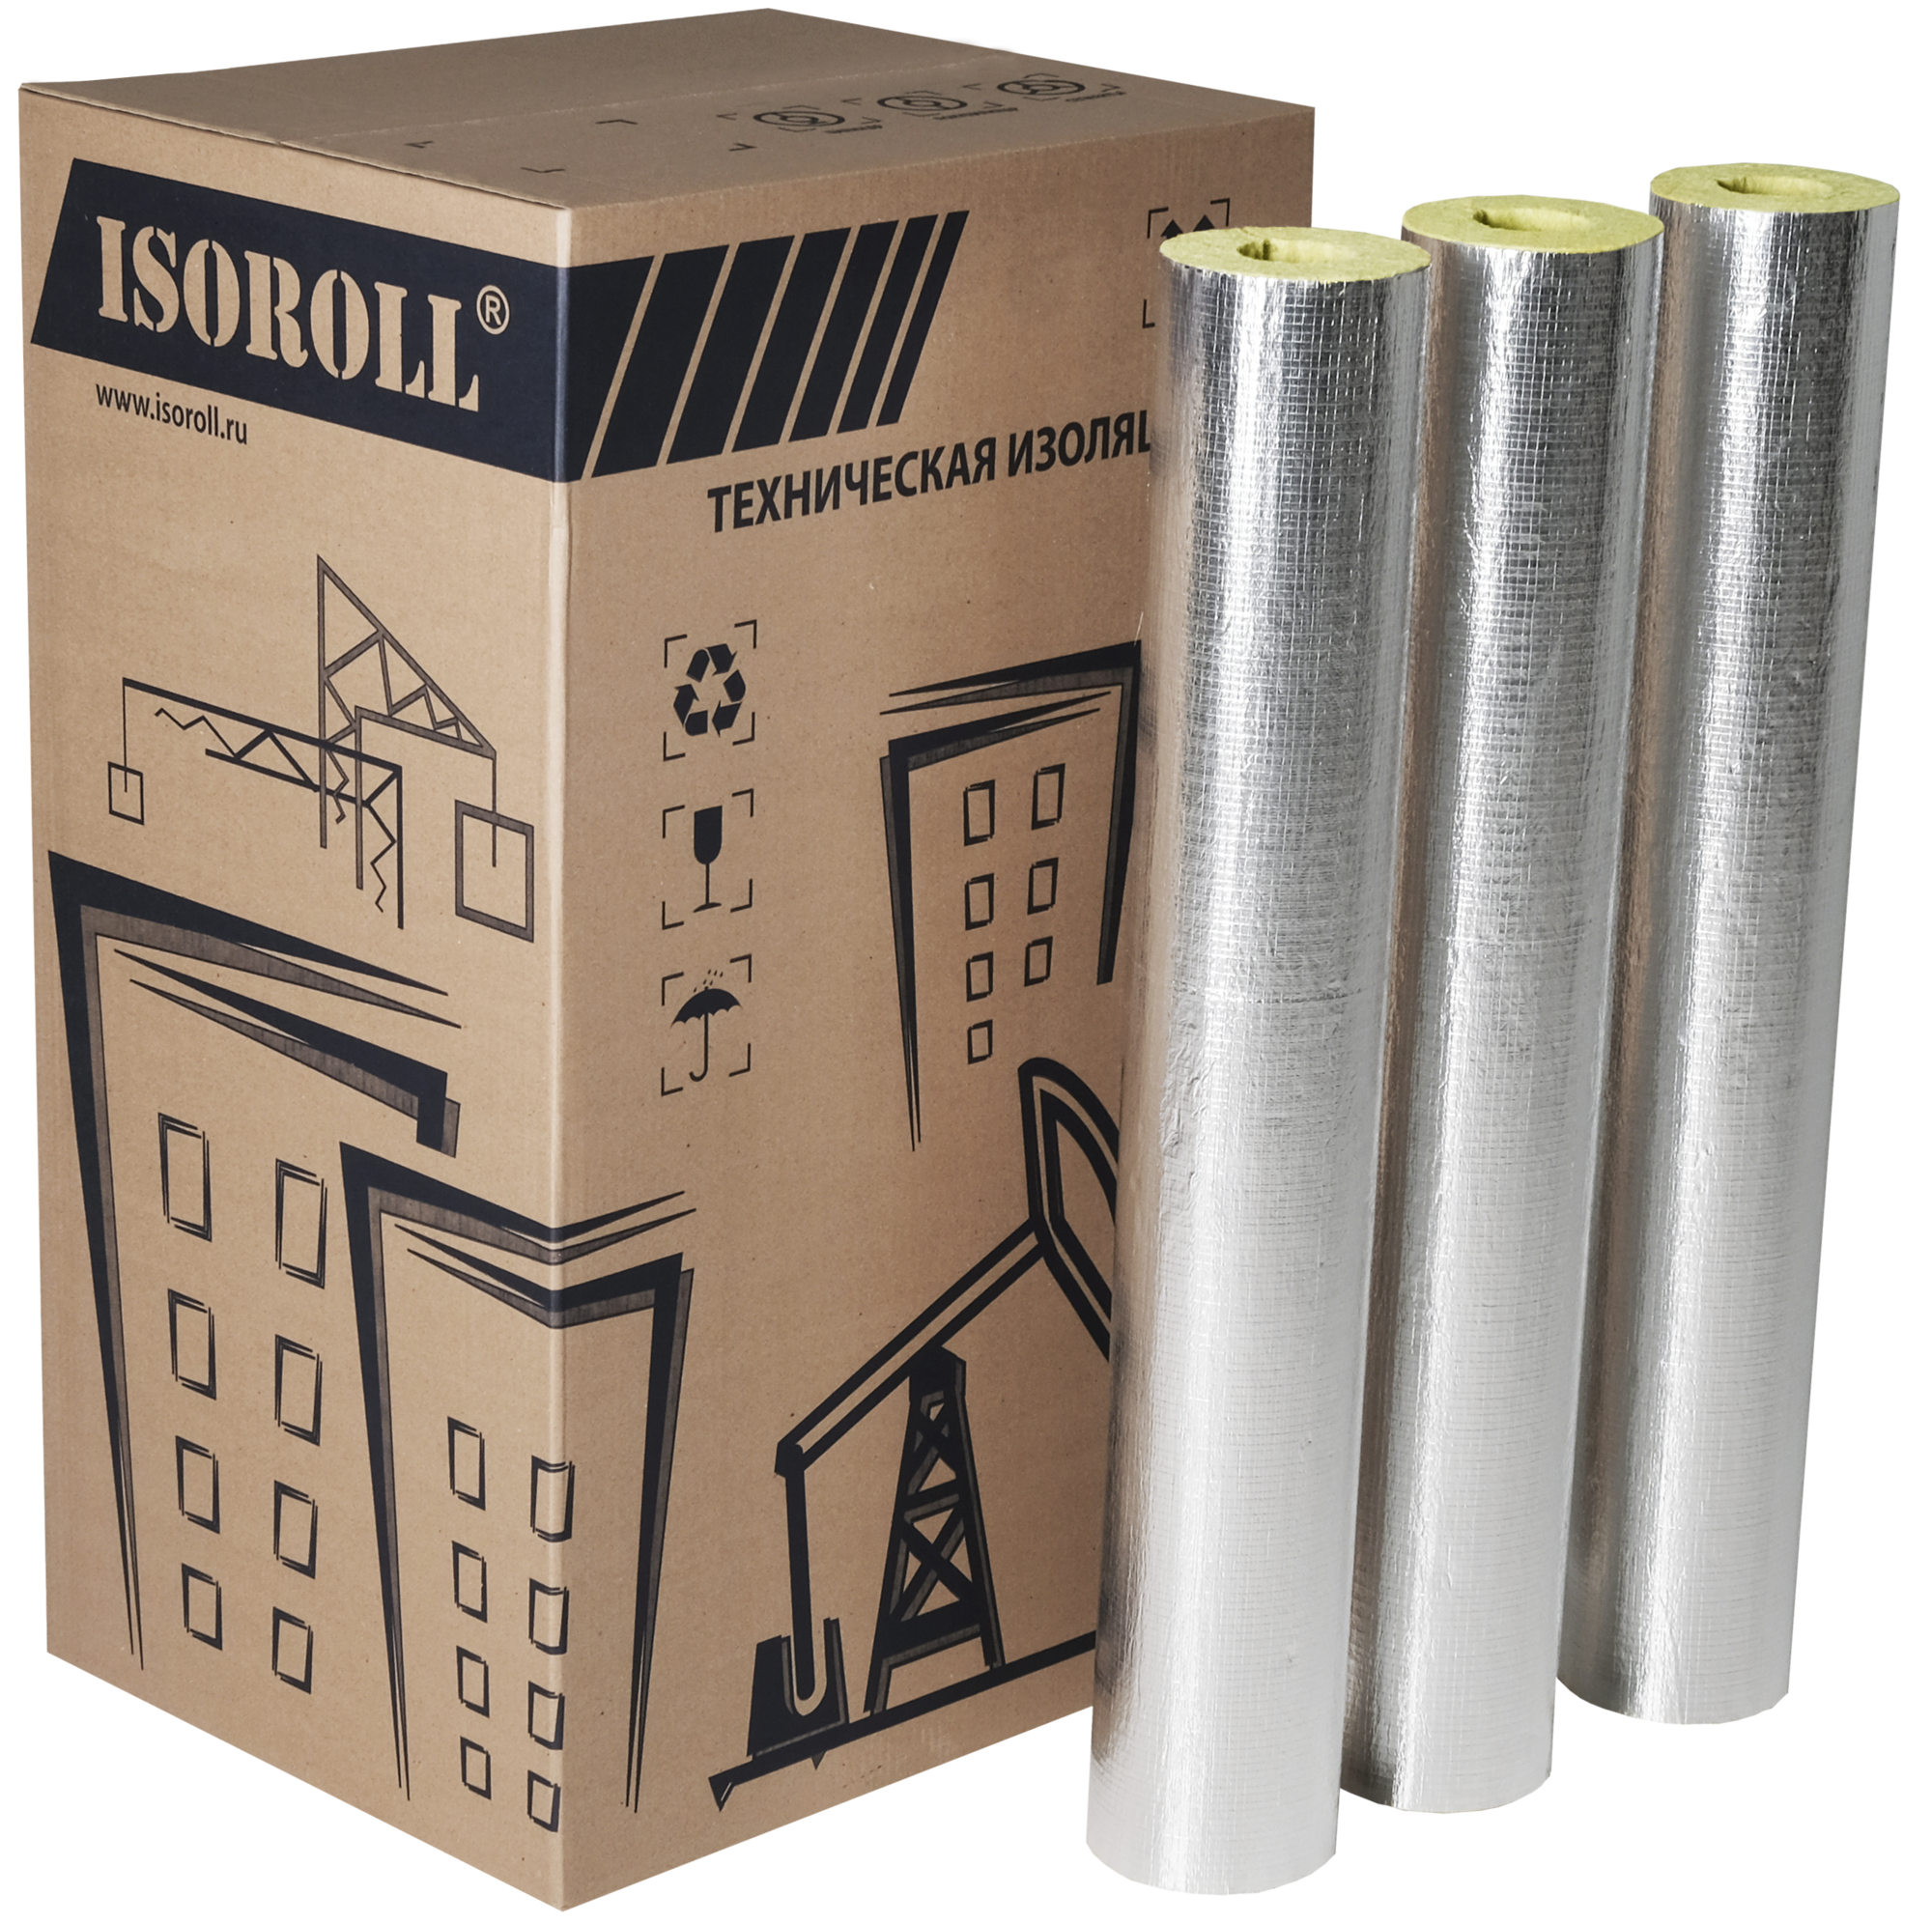 Цилиндр теплоизоляционный Isoroll® с технической фольгой НГ для труб 60 мм x 20 мм